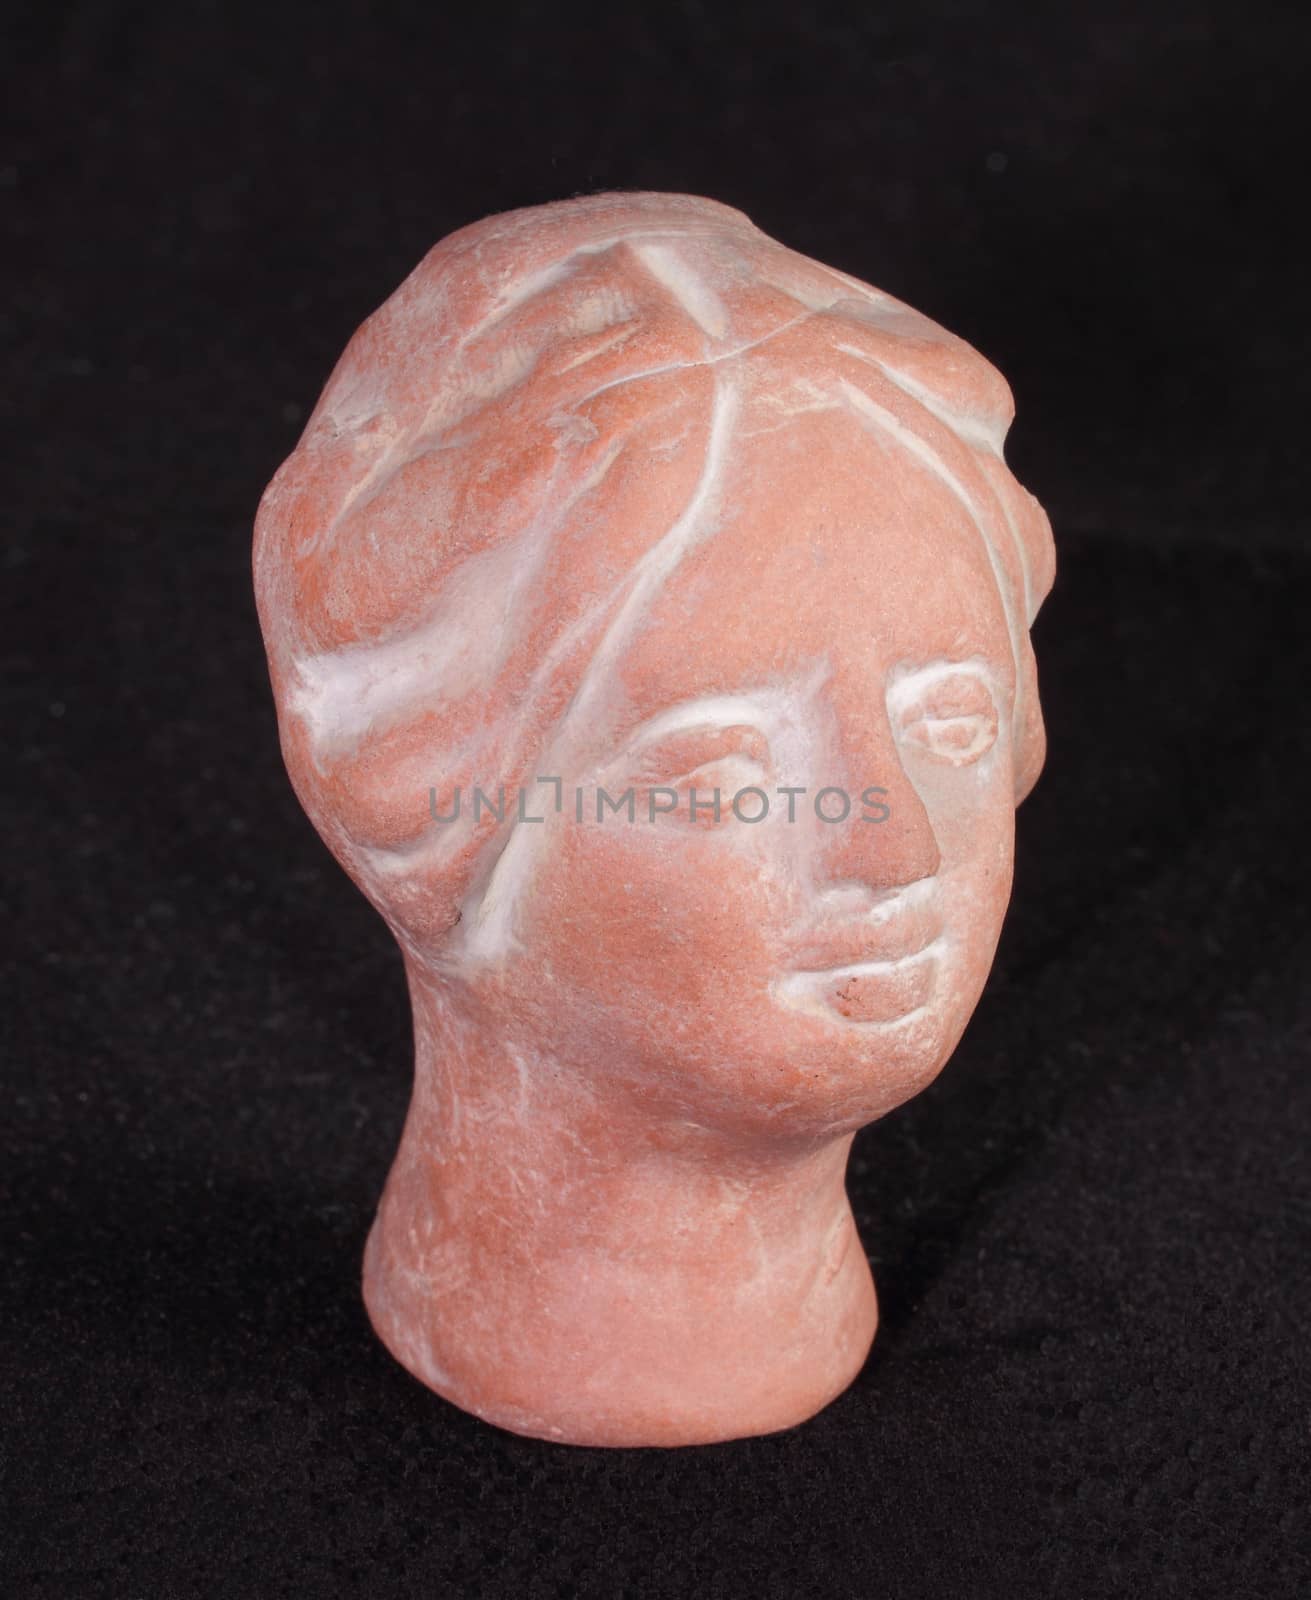 Sculptural portrait of an antique head from ceramics